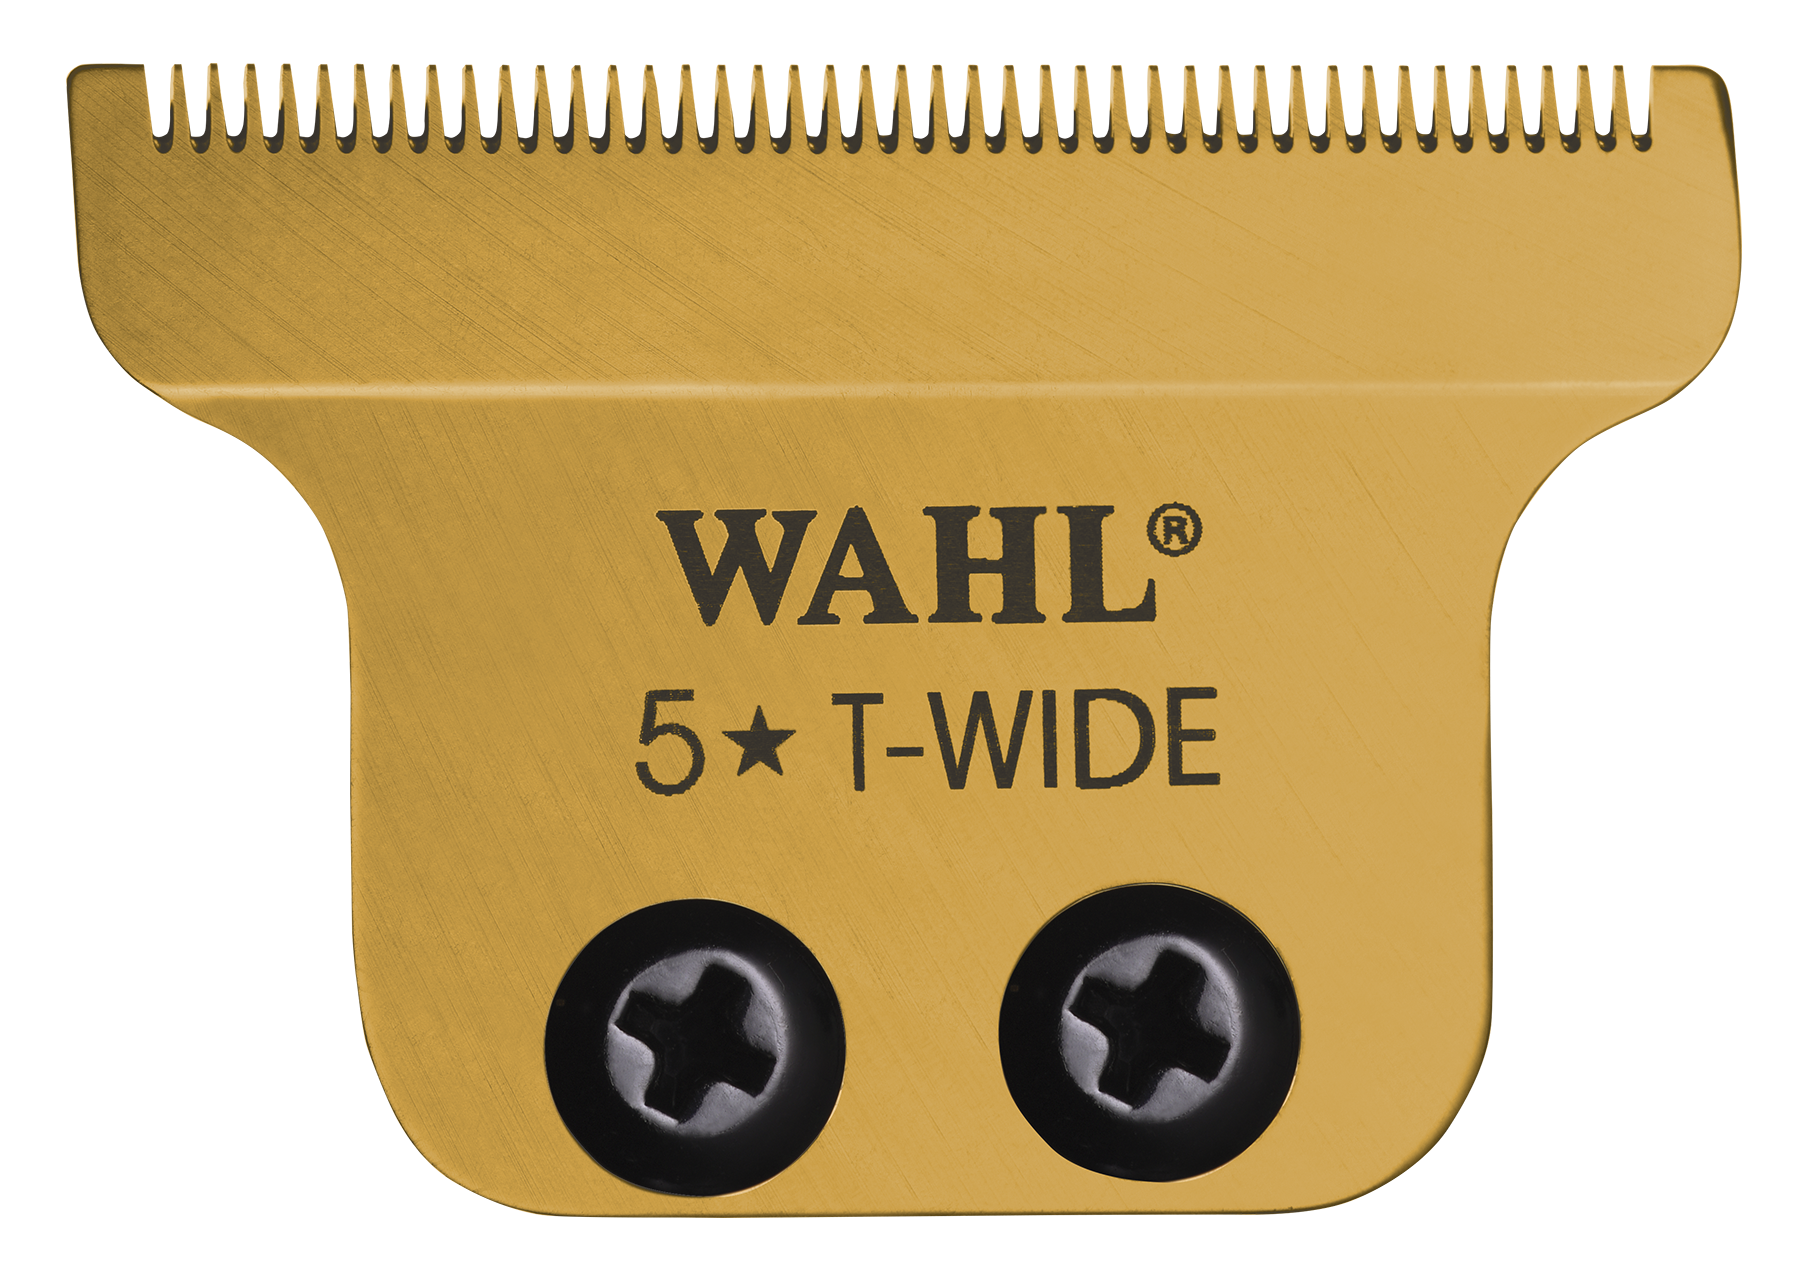 WAHL LI Cordless Detailer Gold 4